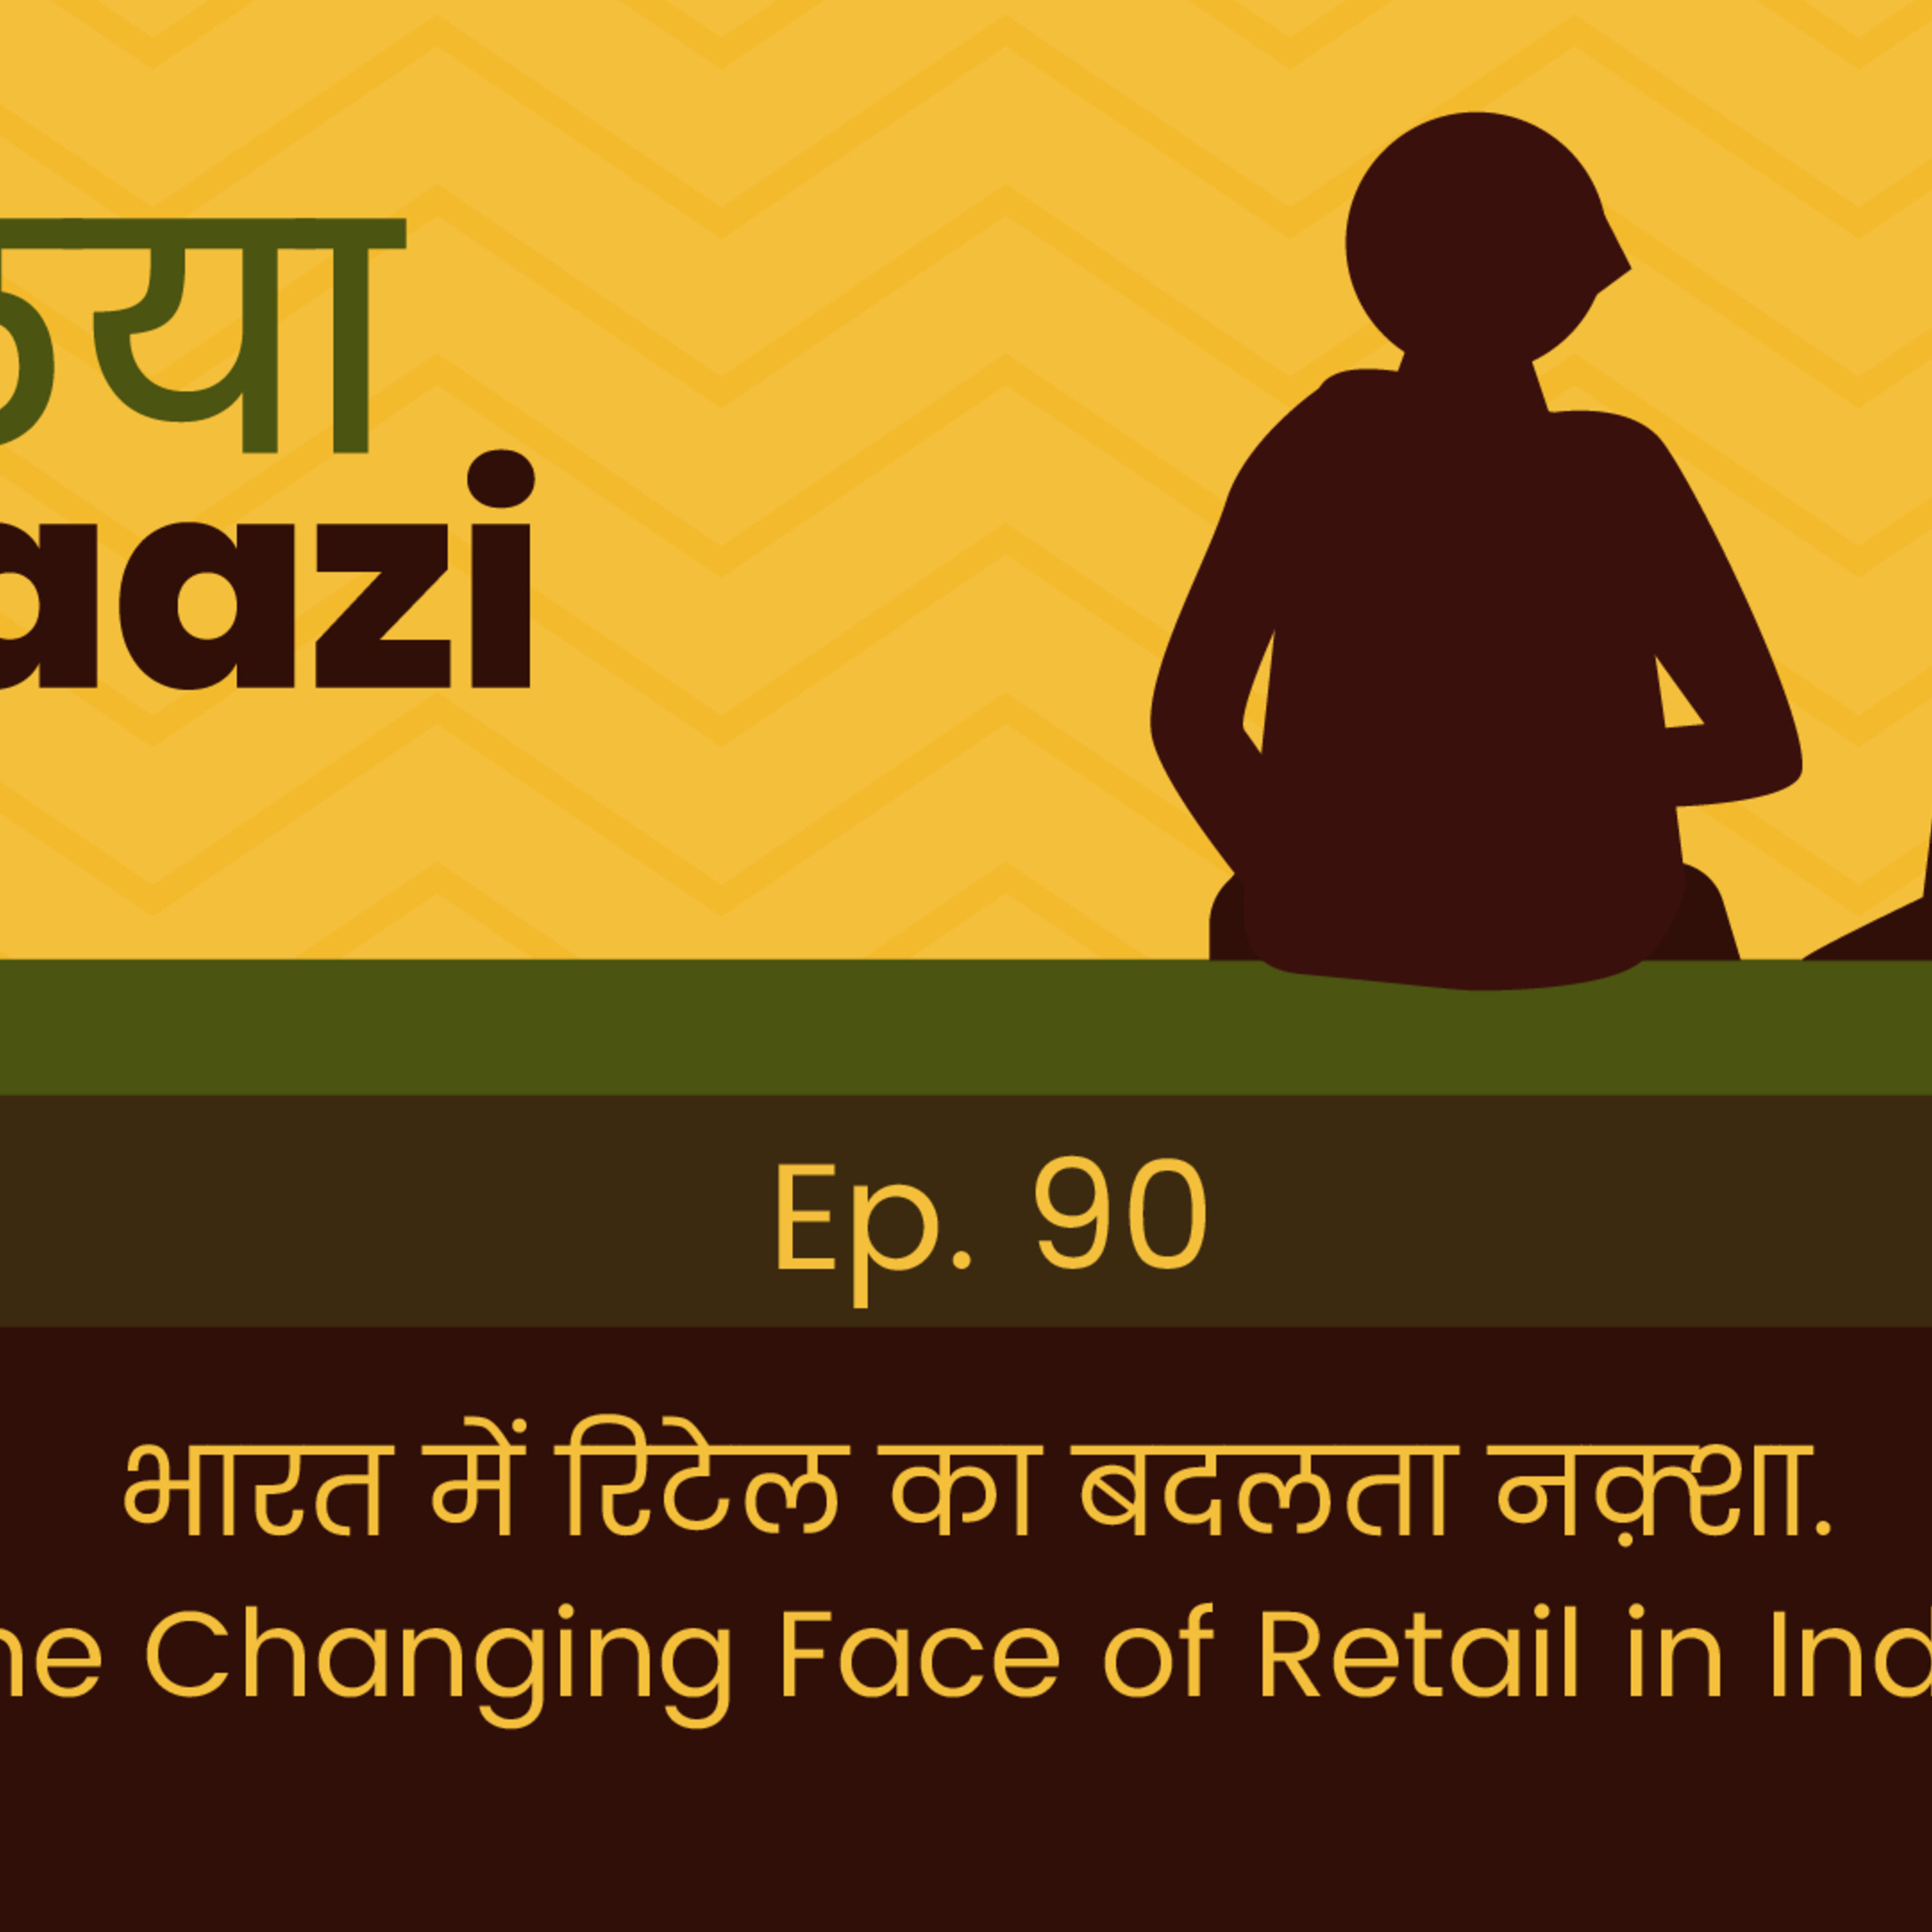 भारत में रिटेल का बदलता नक़्शा. The Changing Face of Retail in India